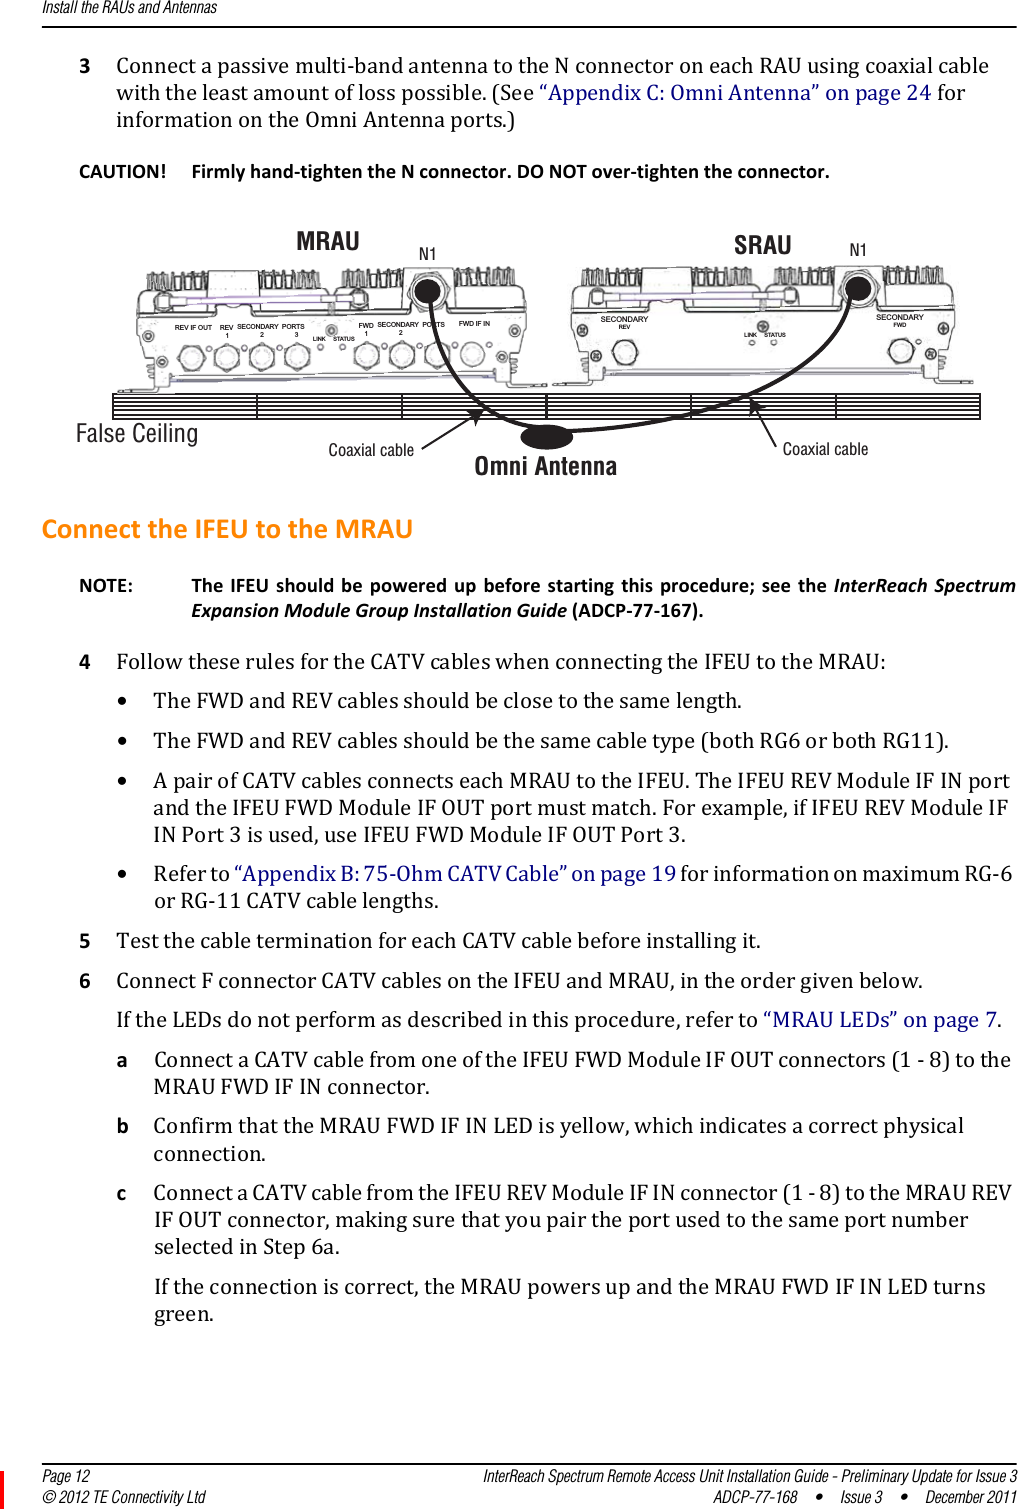 Page 14 of ADC Telecommunications S2197-011 Spectrum 700 Path 2/HP-AWS Path 2 SRAU User Manual 